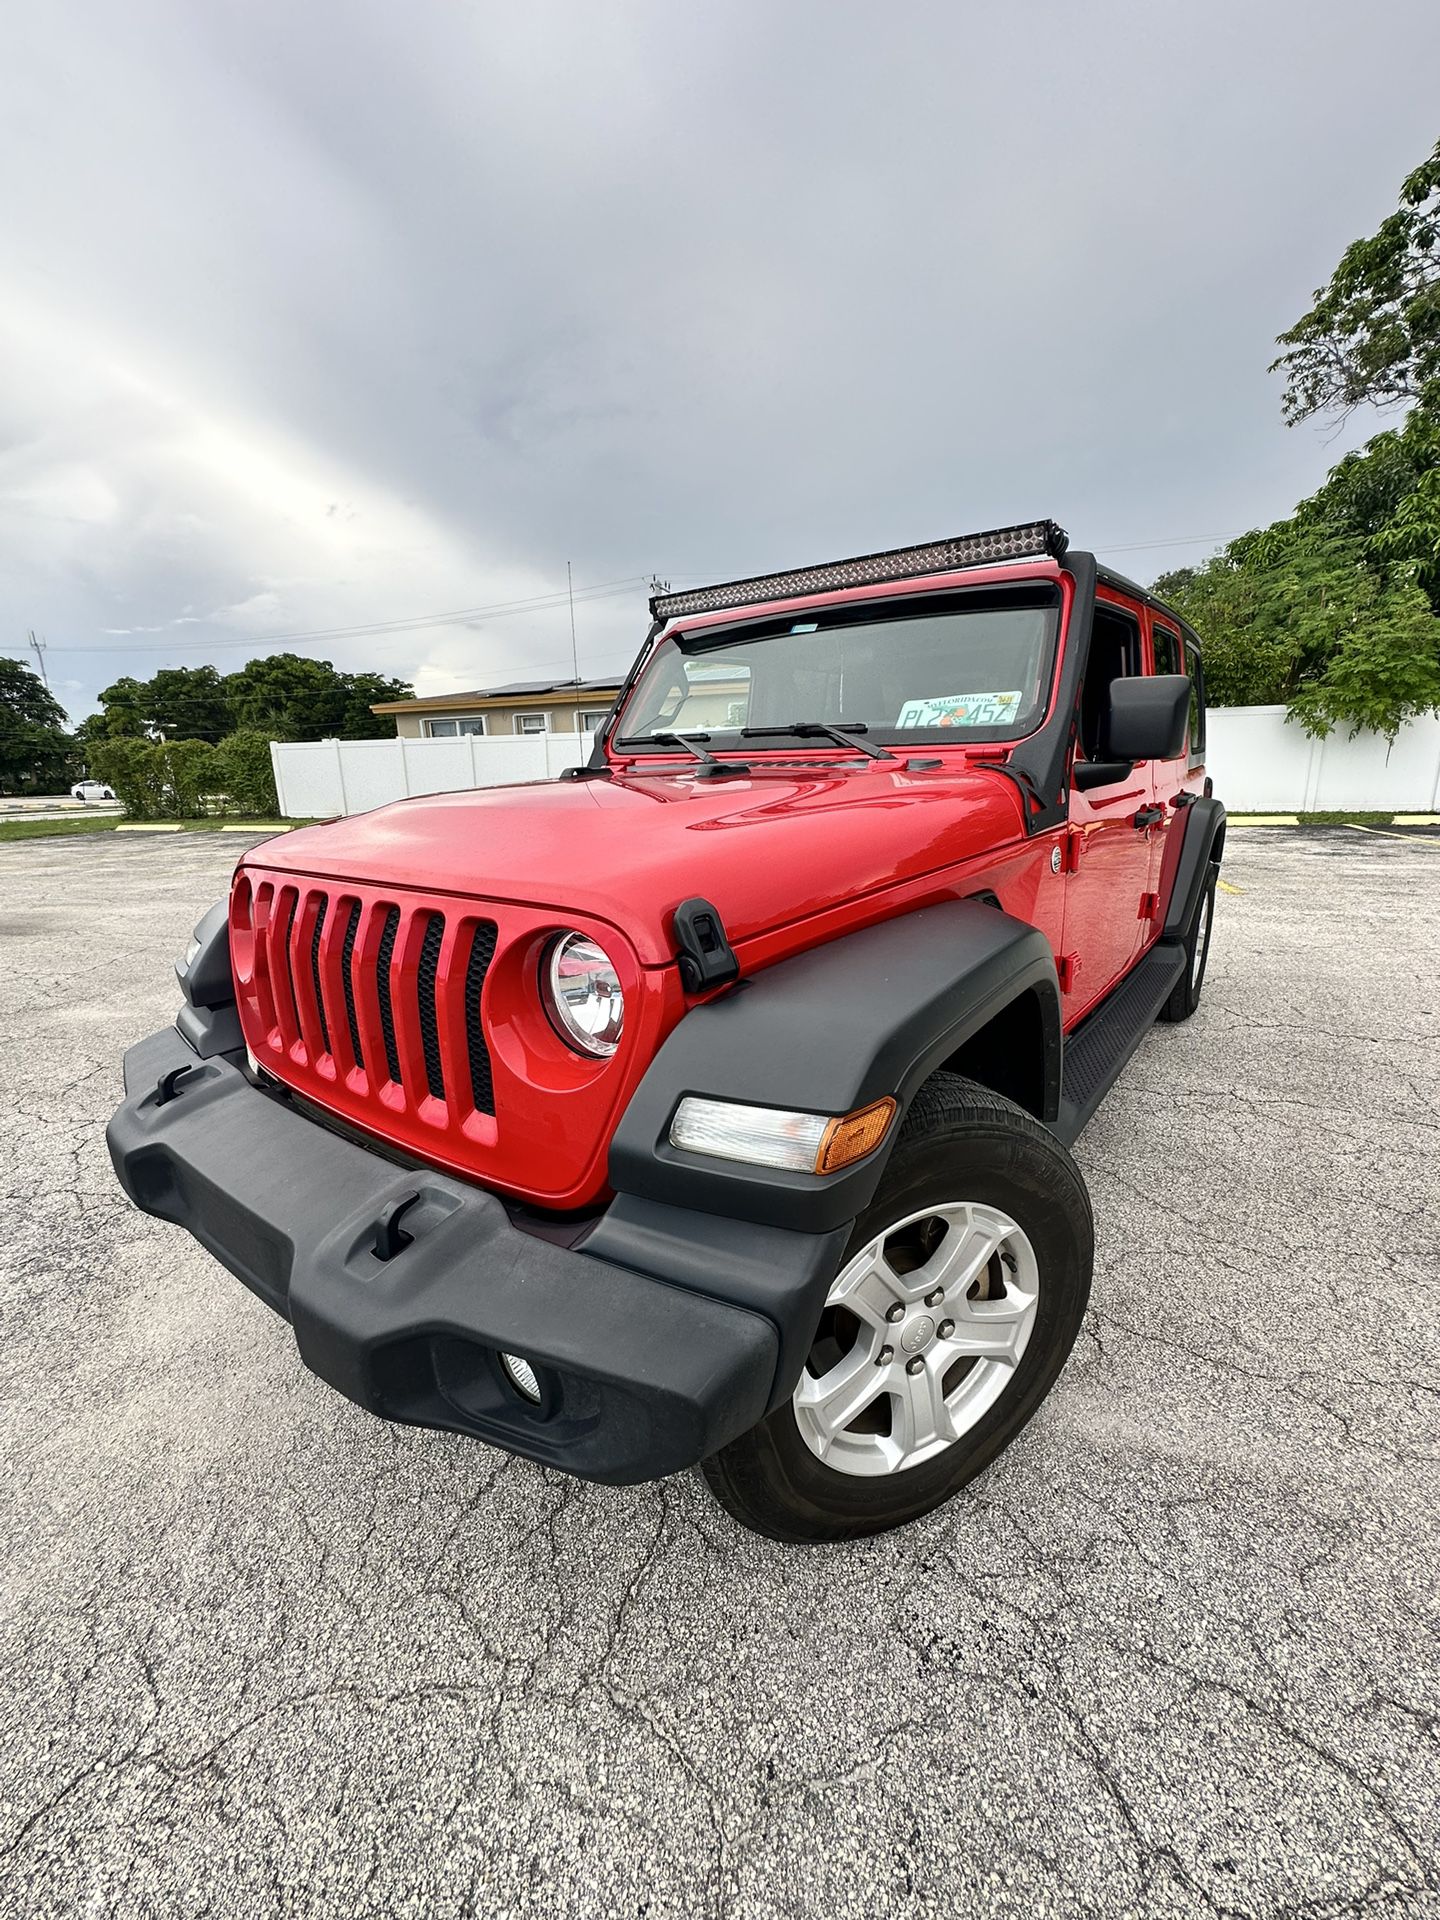 2020 Jeep Wrangler for Sale in Biscayne Park, FL - OfferUp